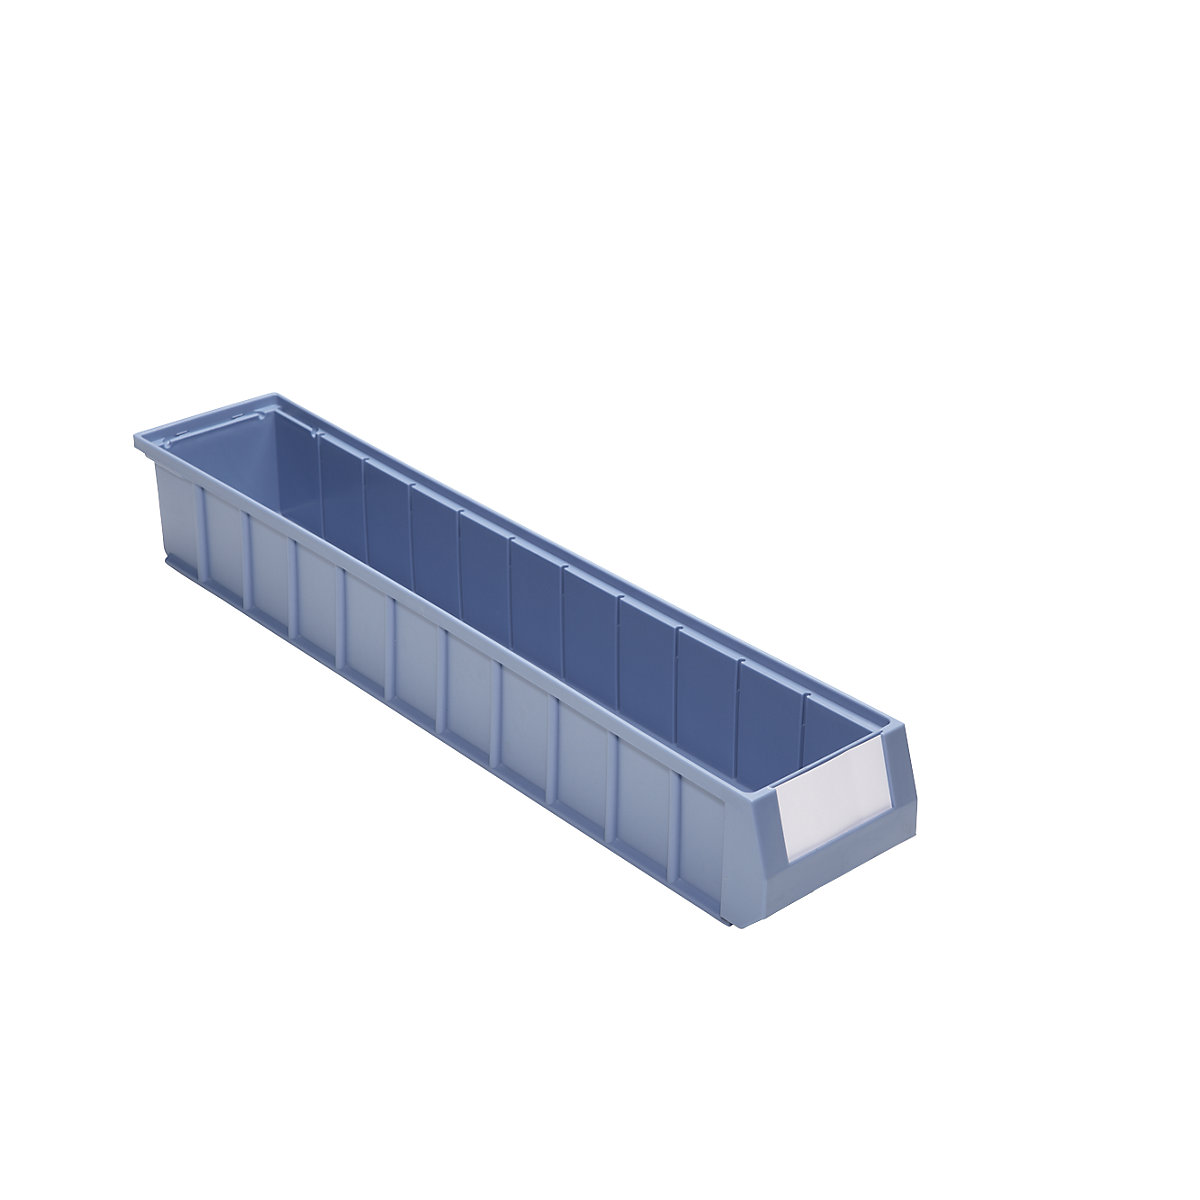 Shelf bin – mauser, length 600 mm, WxH 117 x 90 mm, pack of 16-6